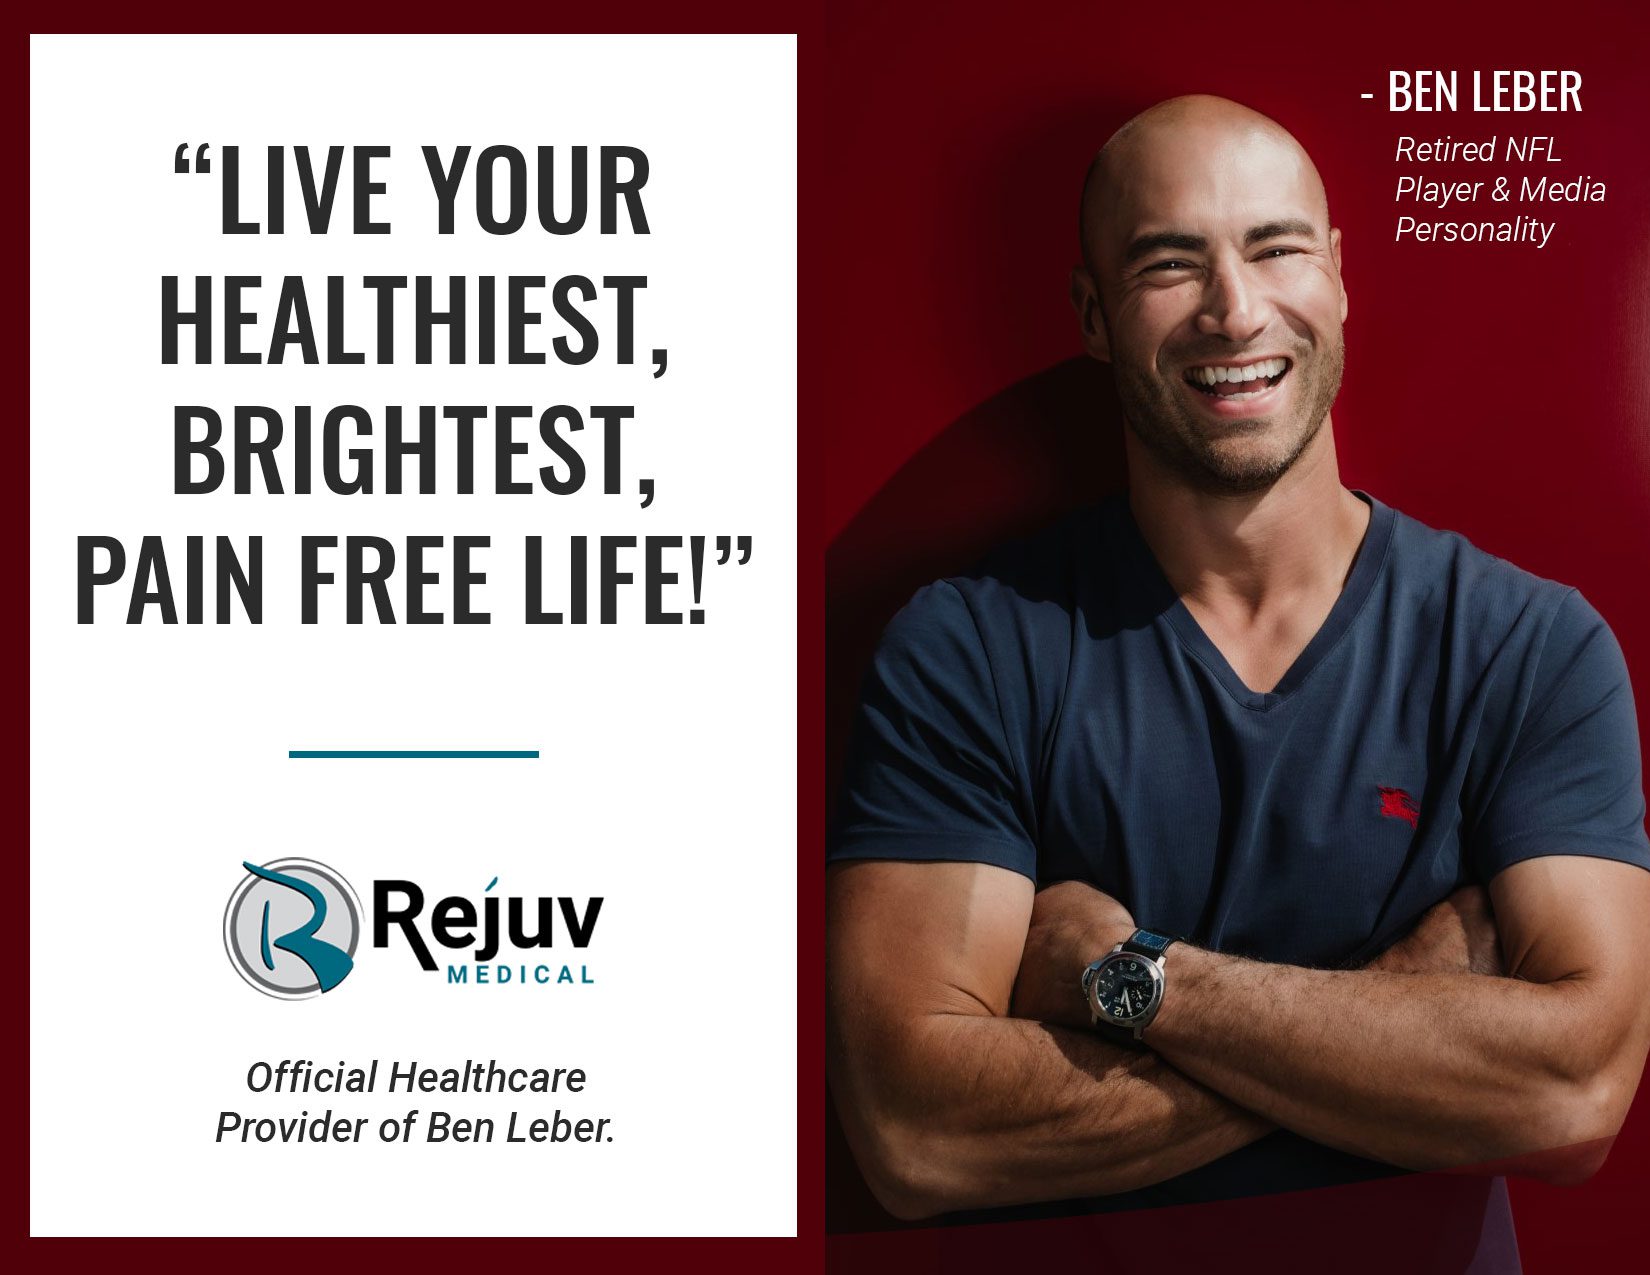 ben leber and rejuv medical